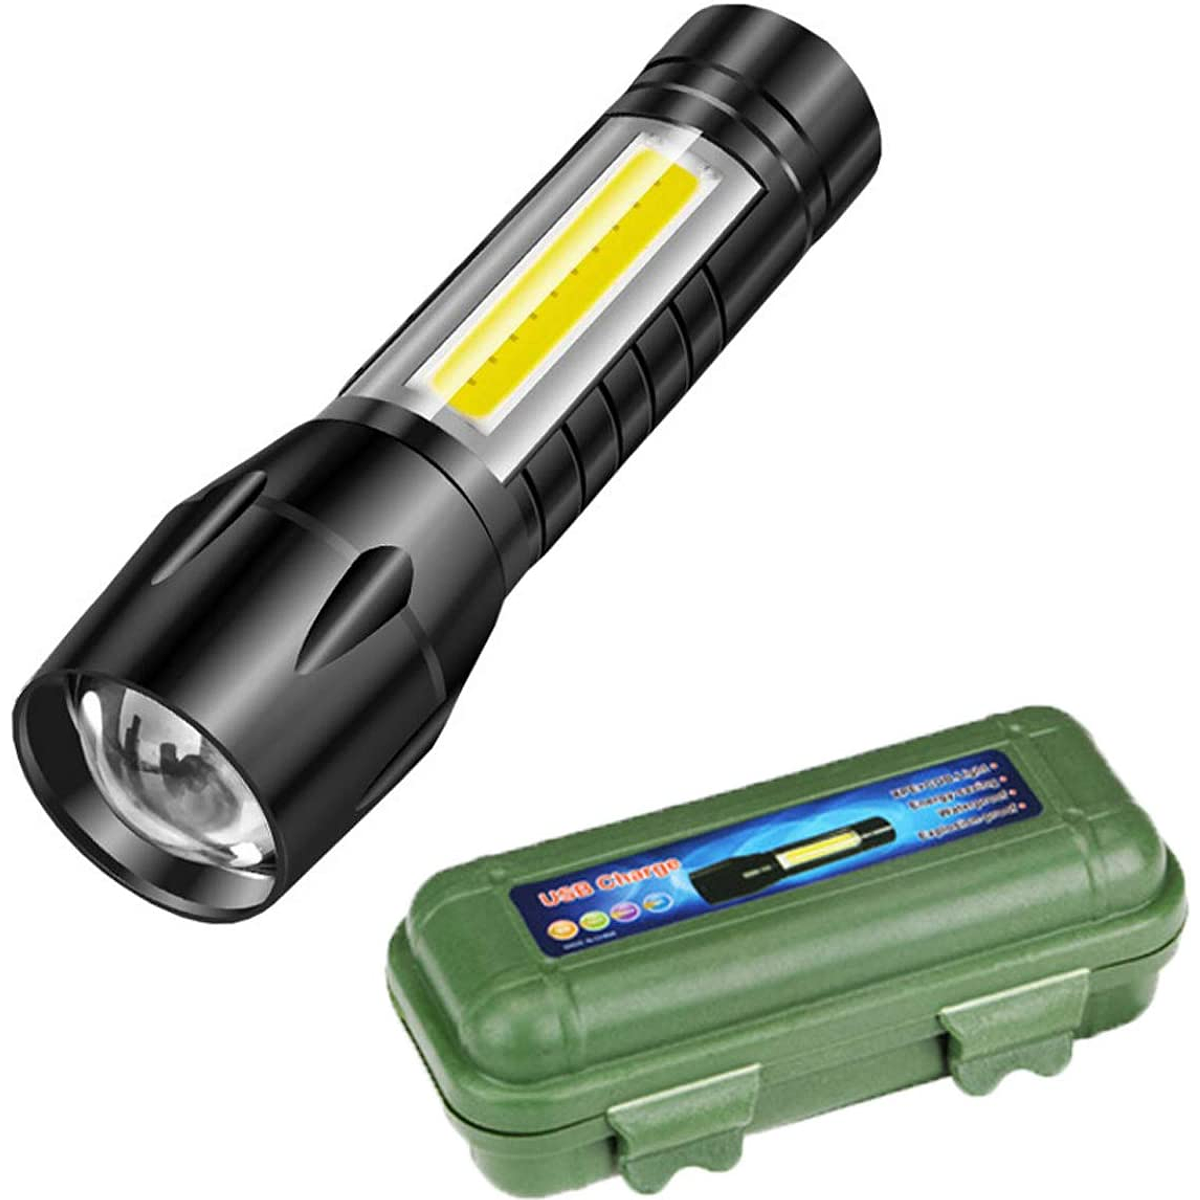 Mini linterna led recargable con USB - Prendeluz